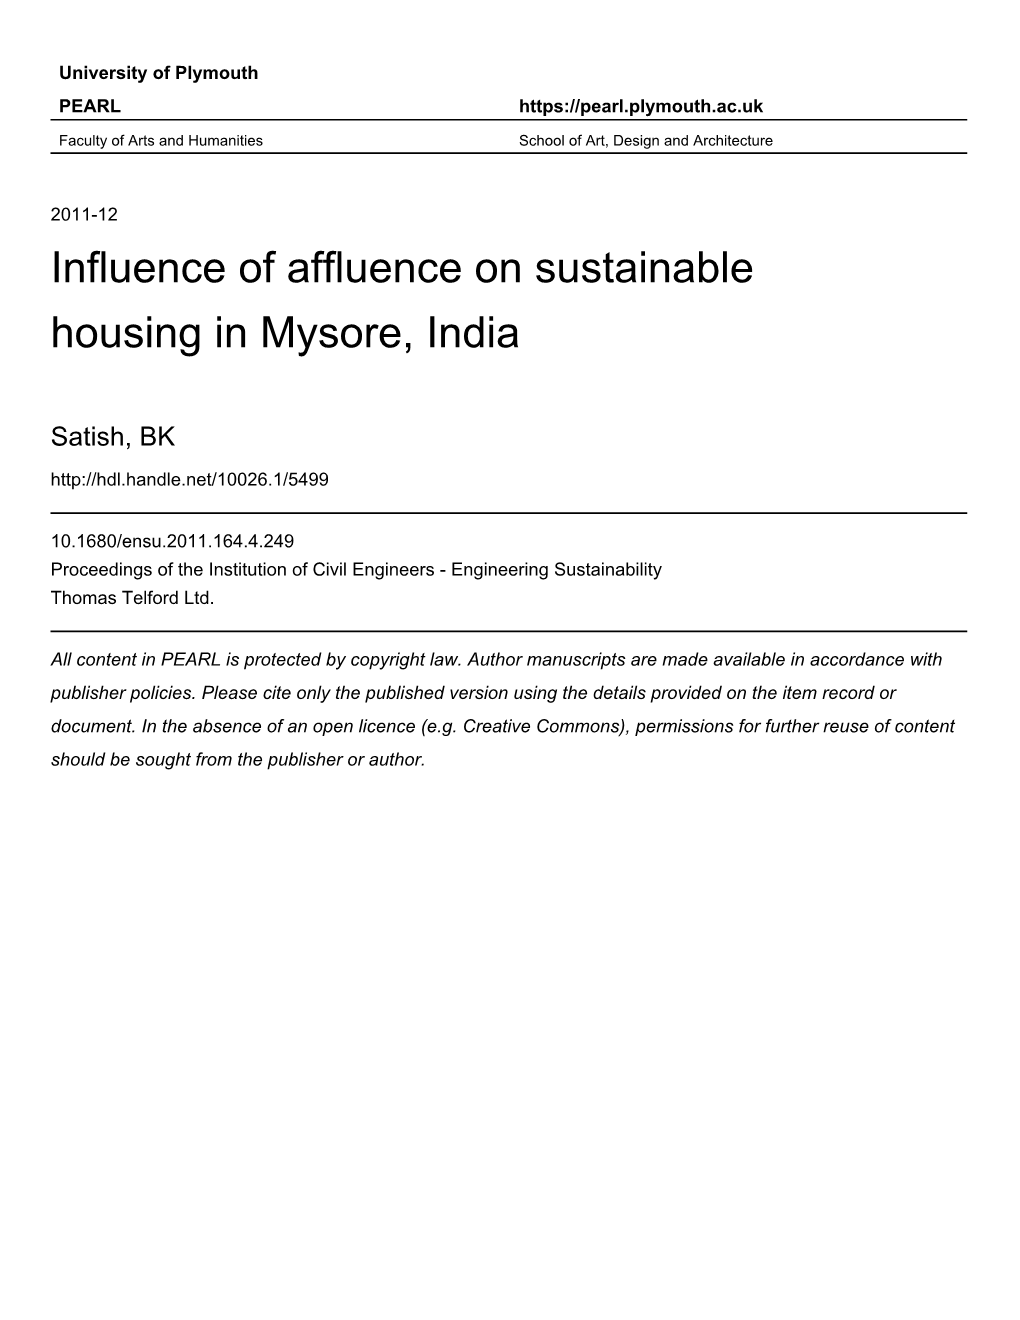 Influence of Affluence on Sustainable Housing in Mysore, India